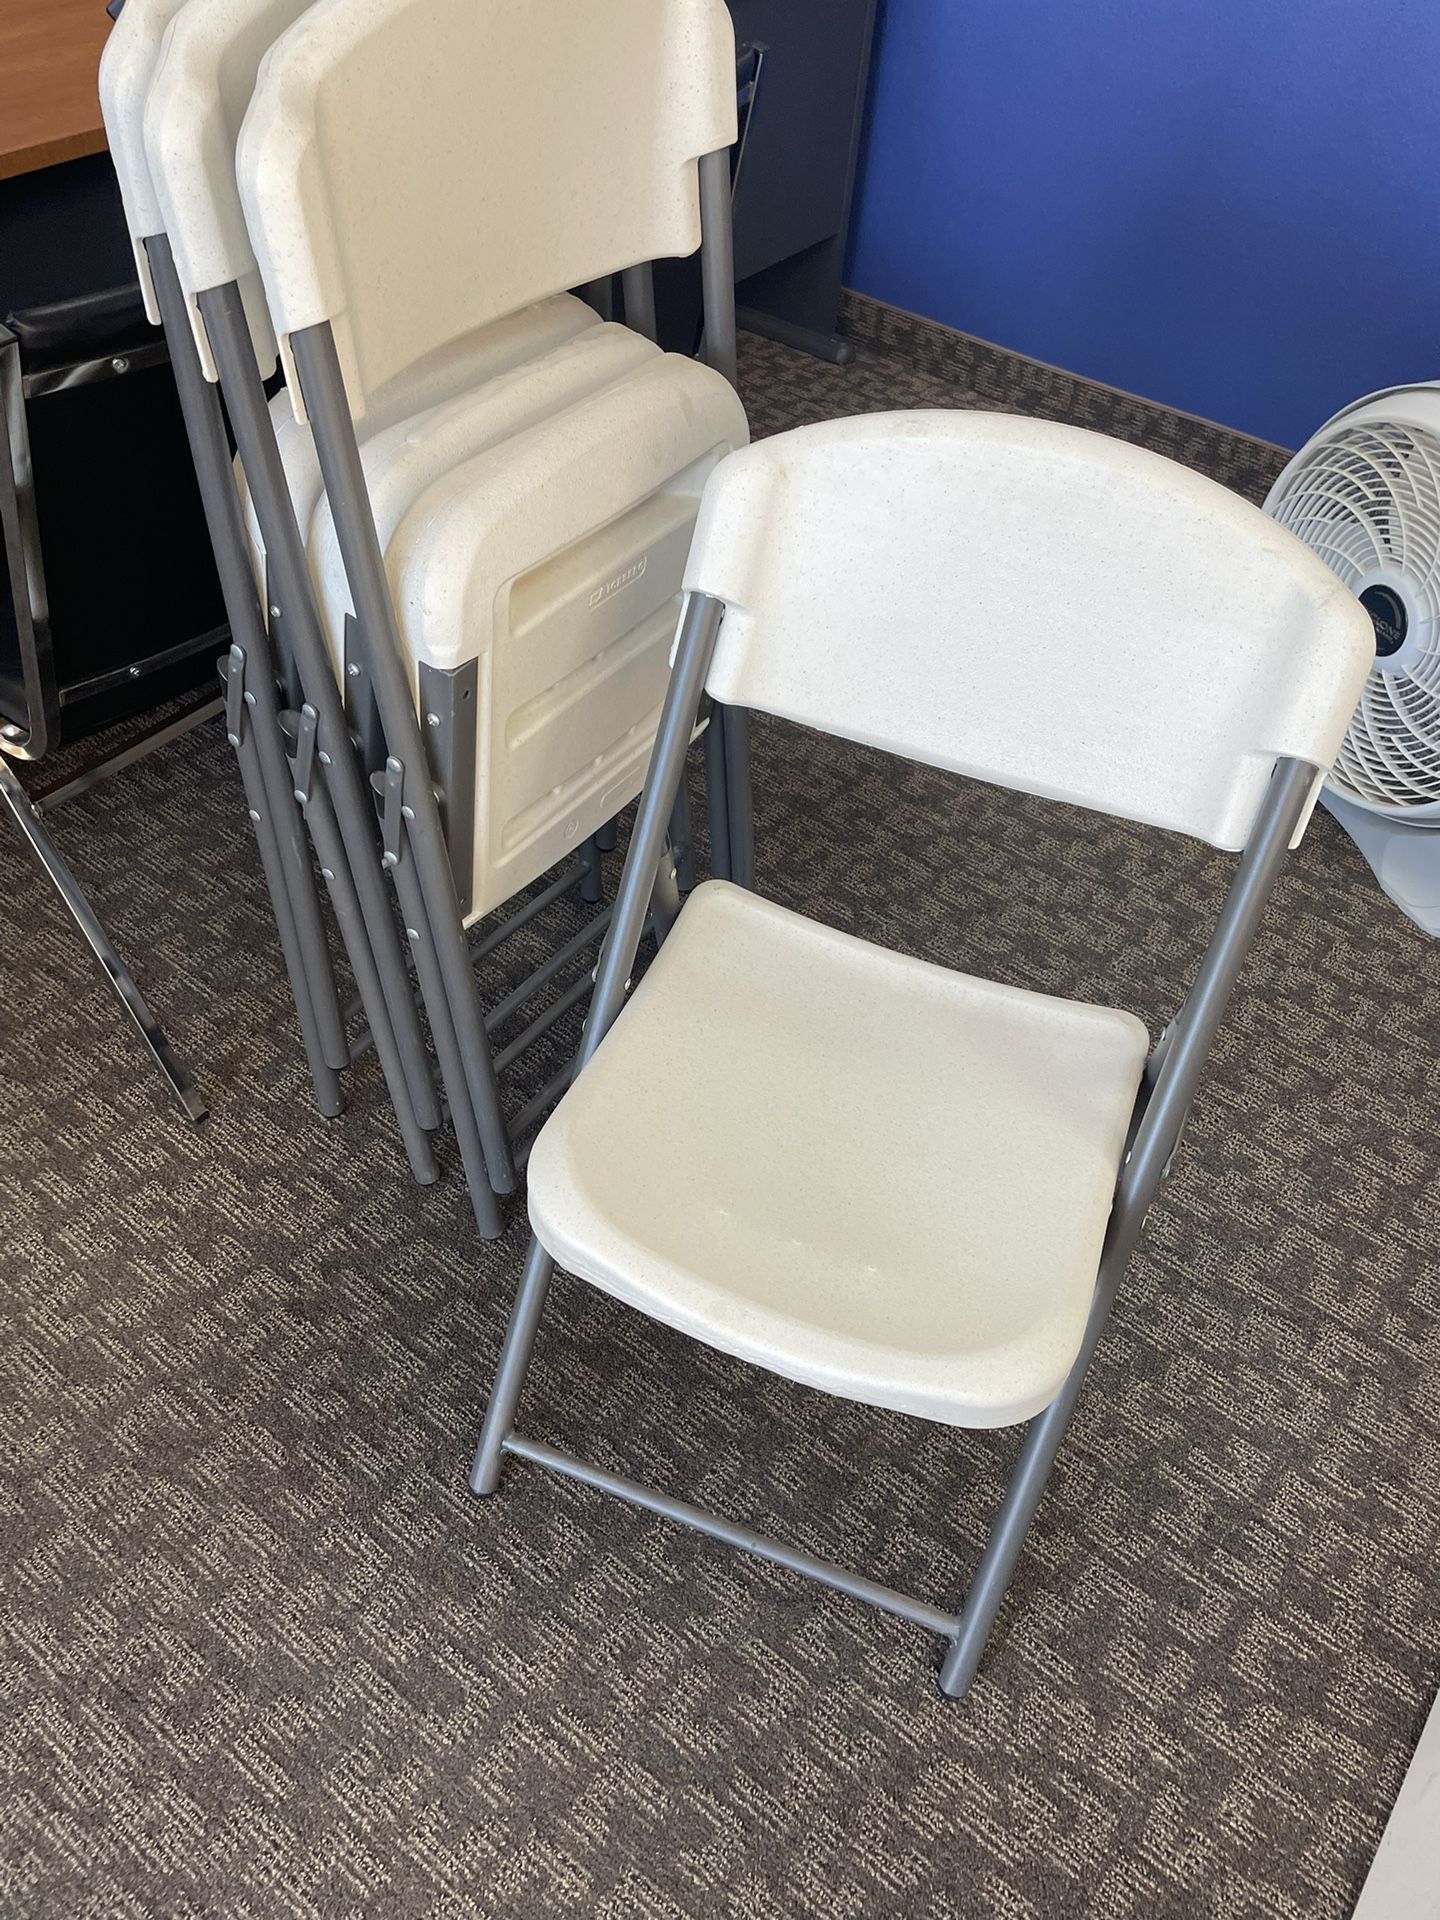 Folding Chairs